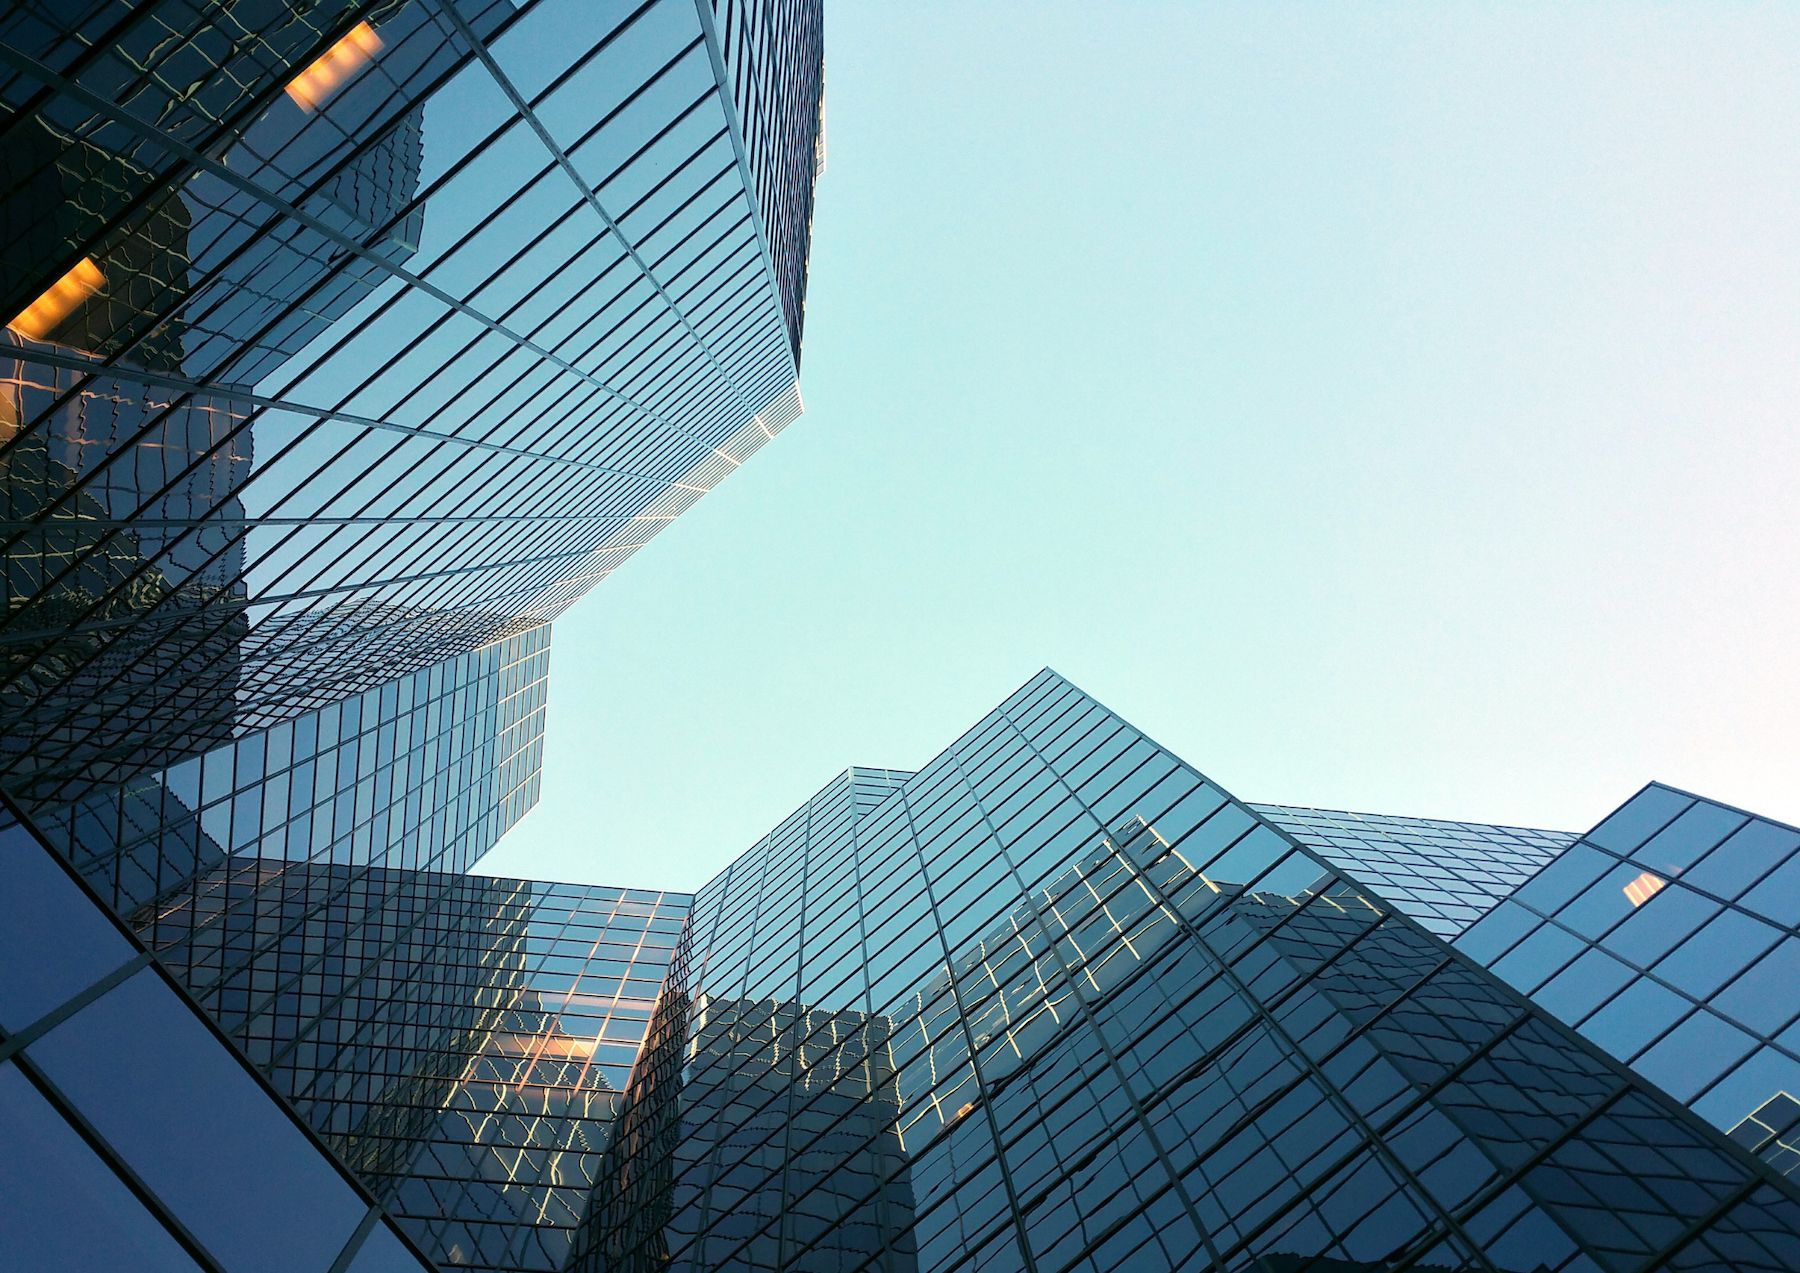 Image of buildings looking towards the sky